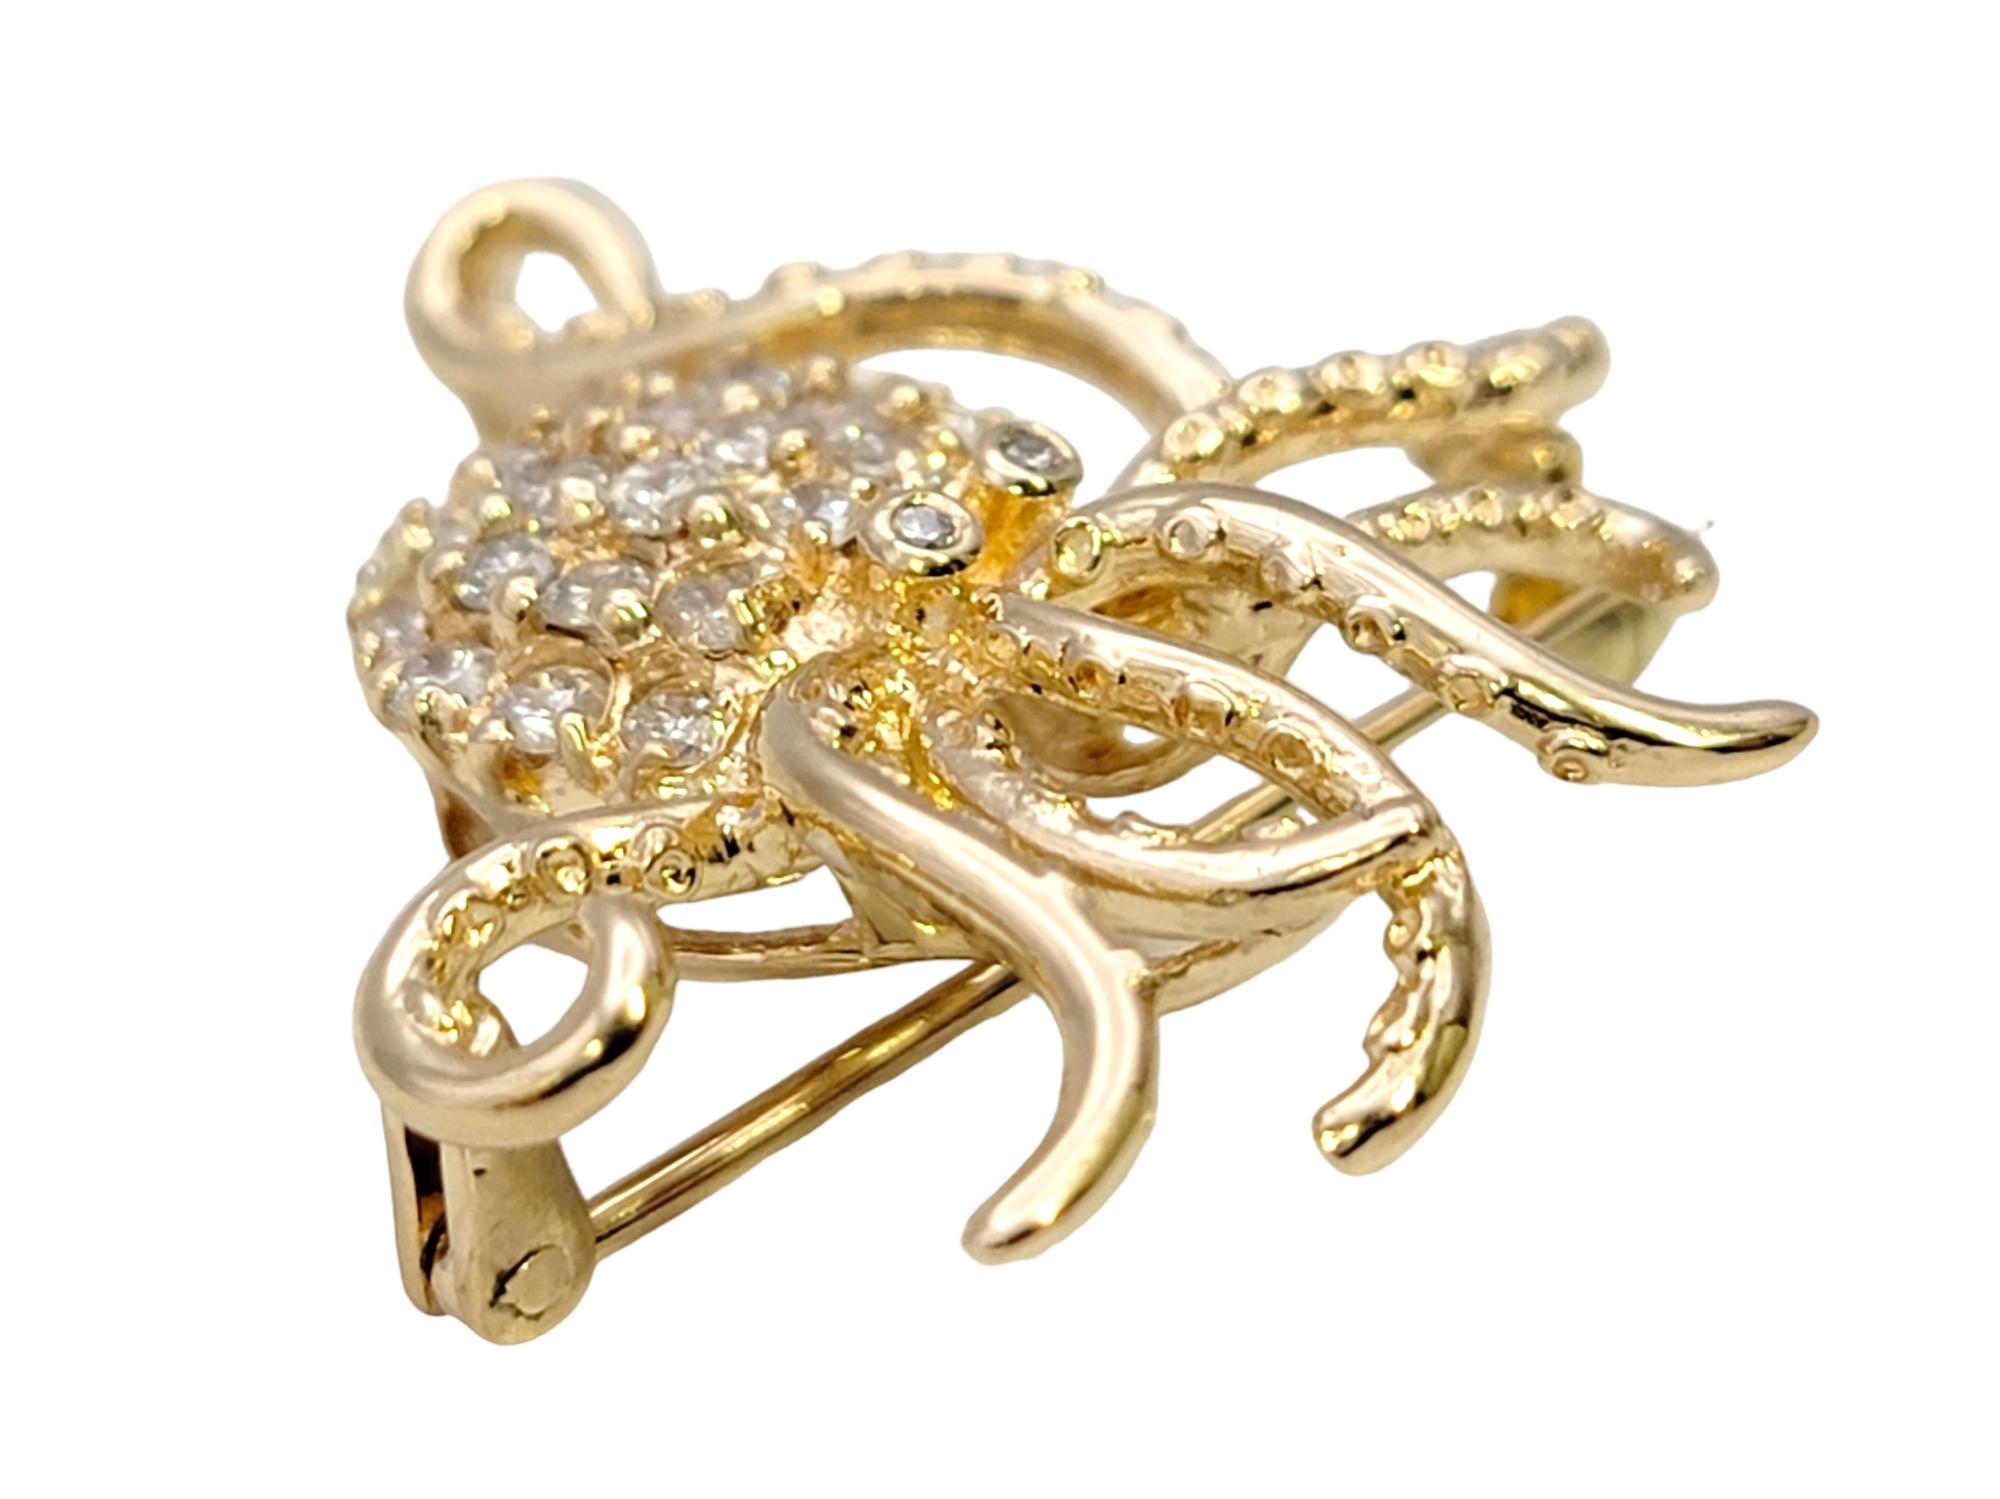 Round Cut Delightful 14 Karat Polished Yellow Gold Octopus Brooch / Pendant with Diamonds